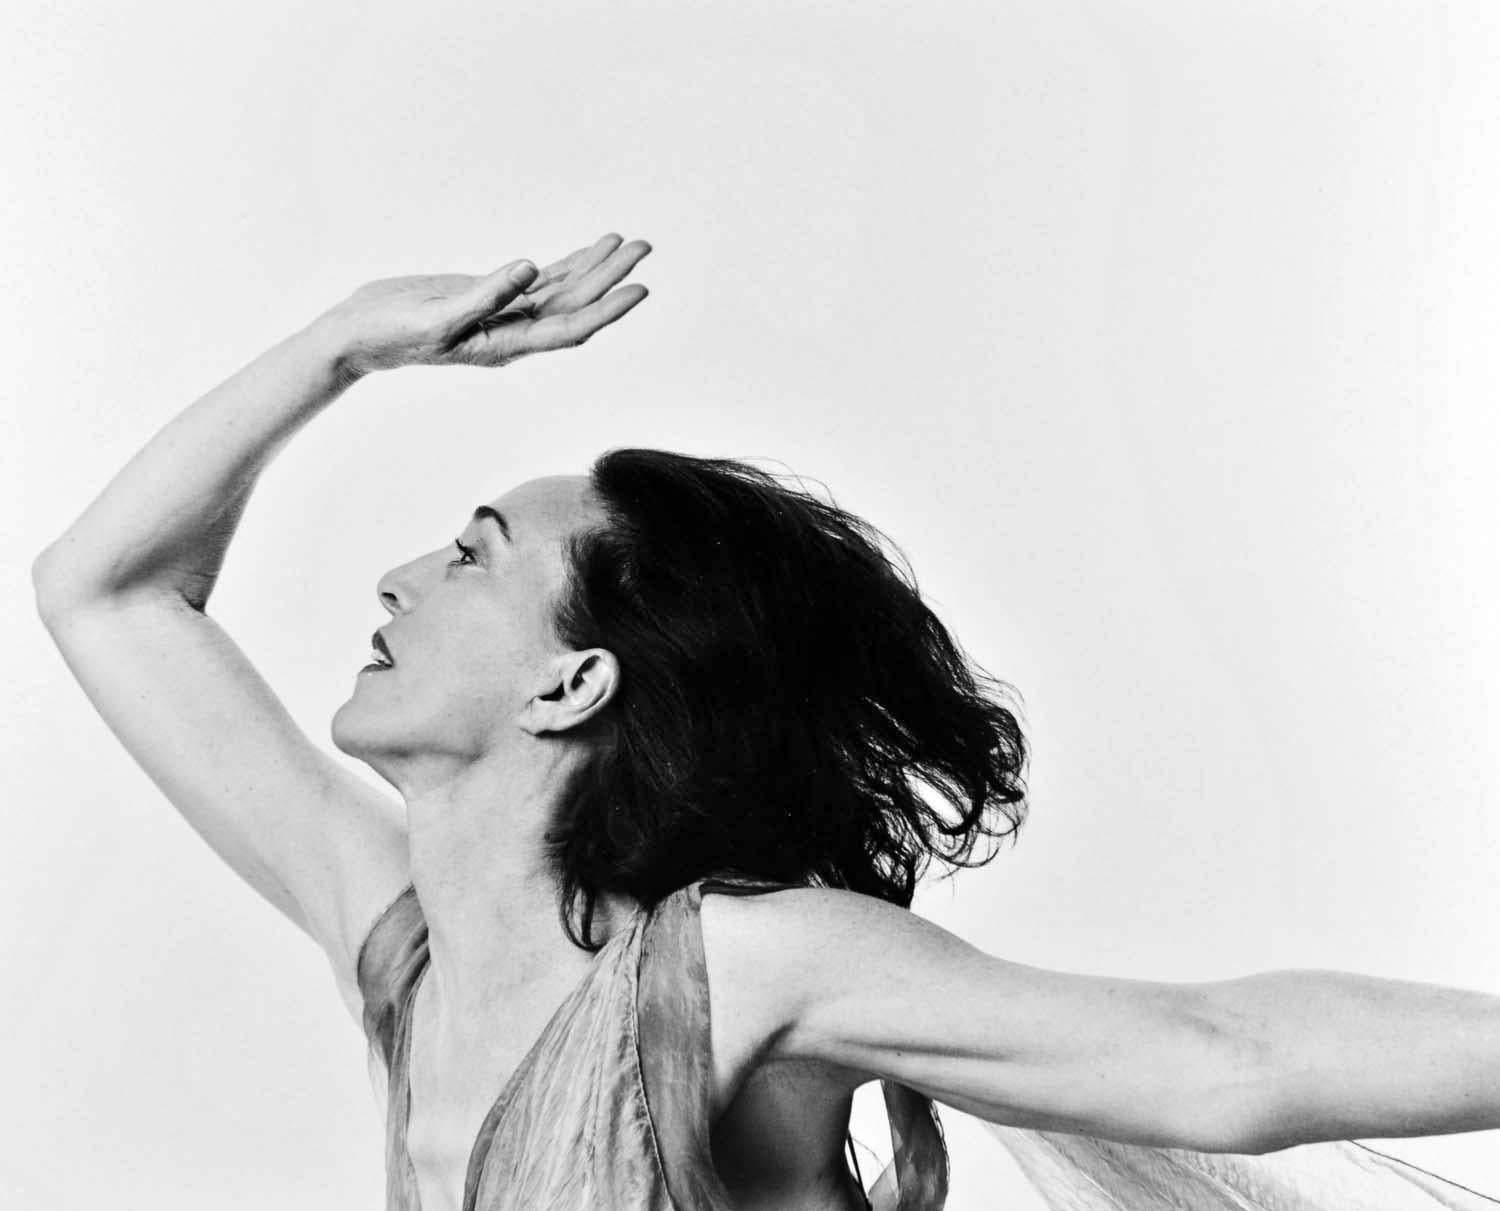 Jack Mitchell Black and White Photograph - Isadora Duncan dancer Lori Belilove performing